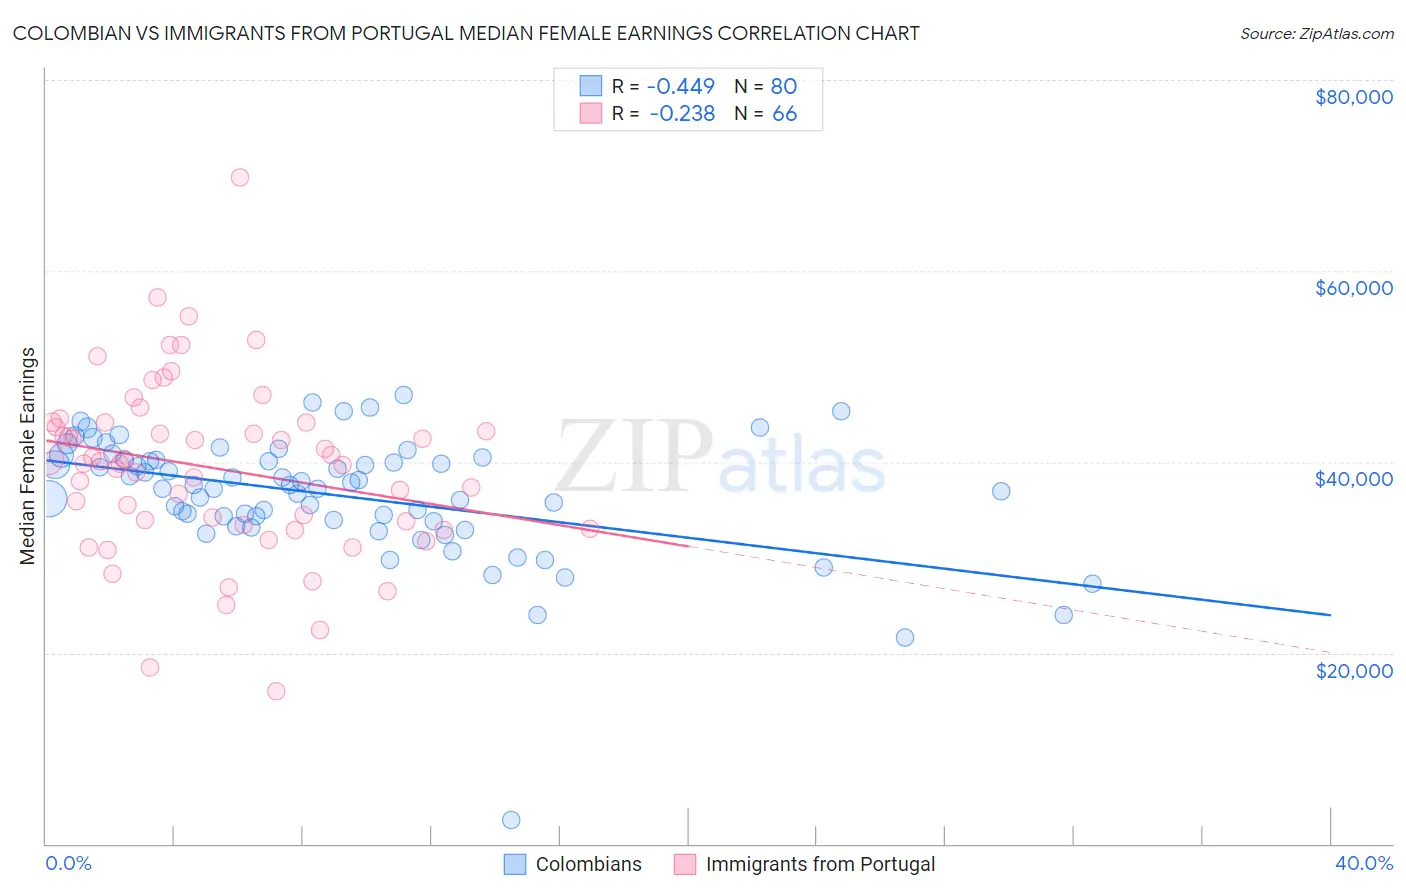 Colombian vs Immigrants from Portugal Median Female Earnings